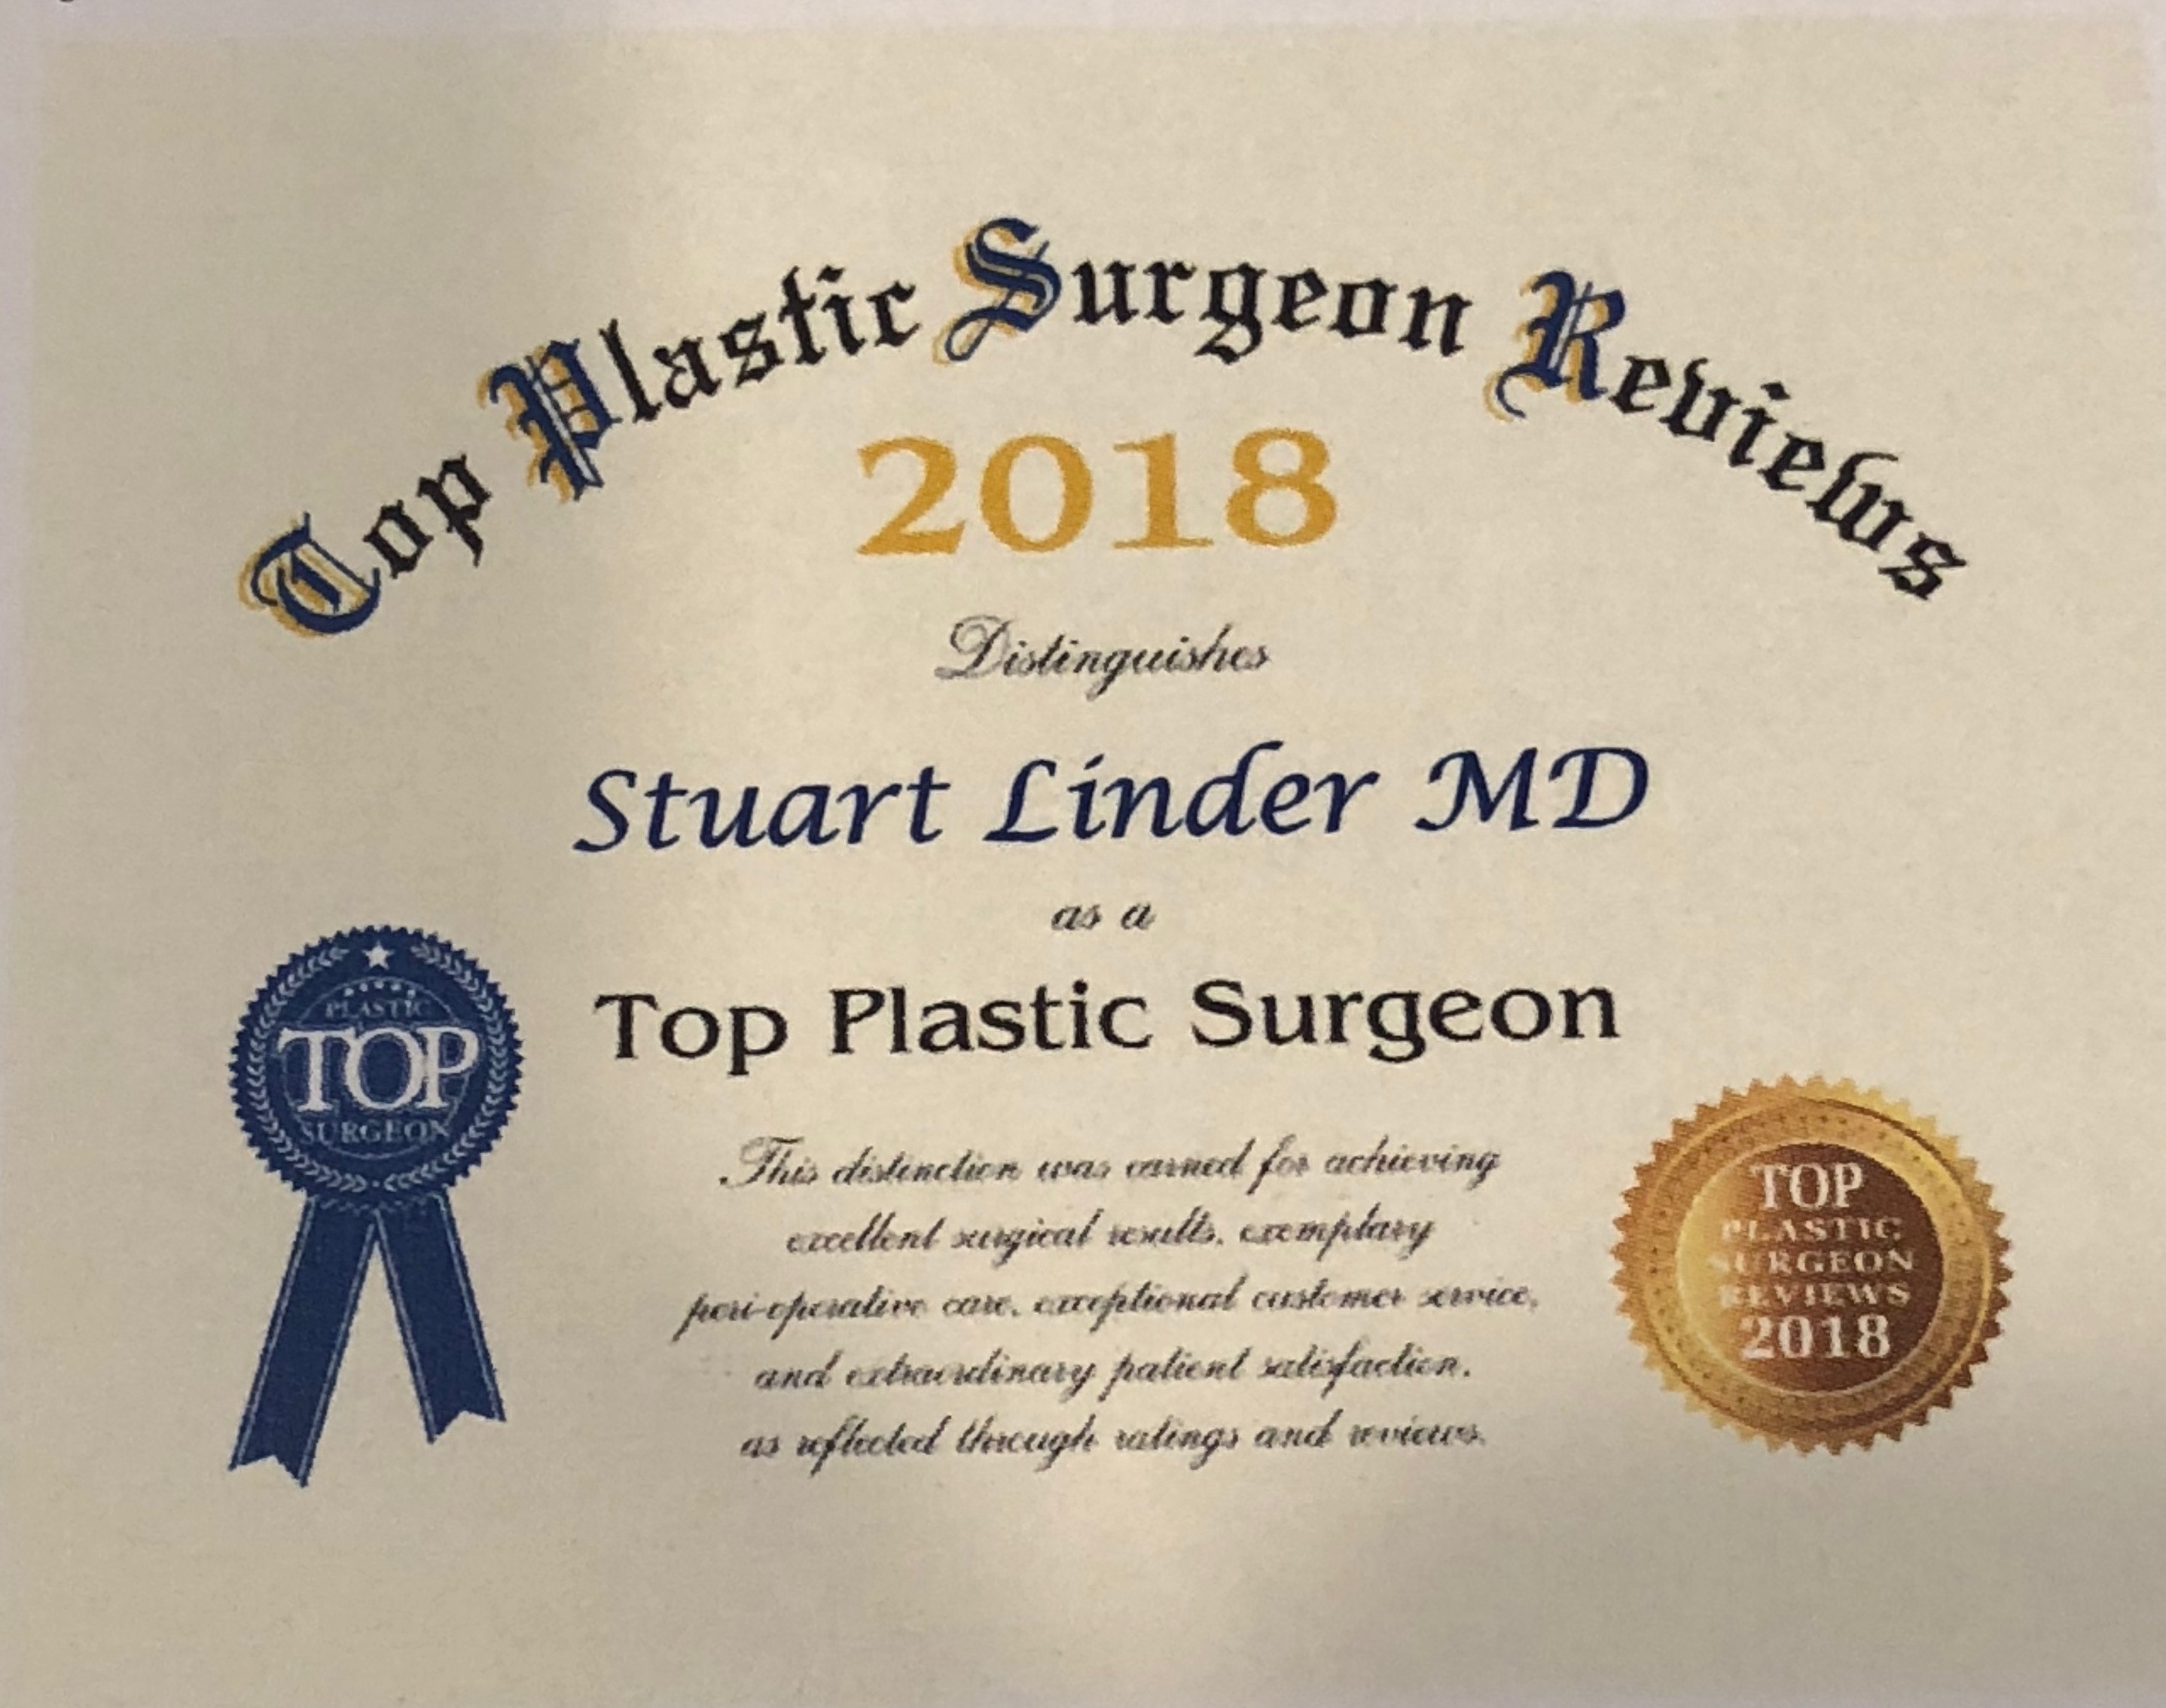 Top Plastic Surgeon Reviews 2018 Certificate 